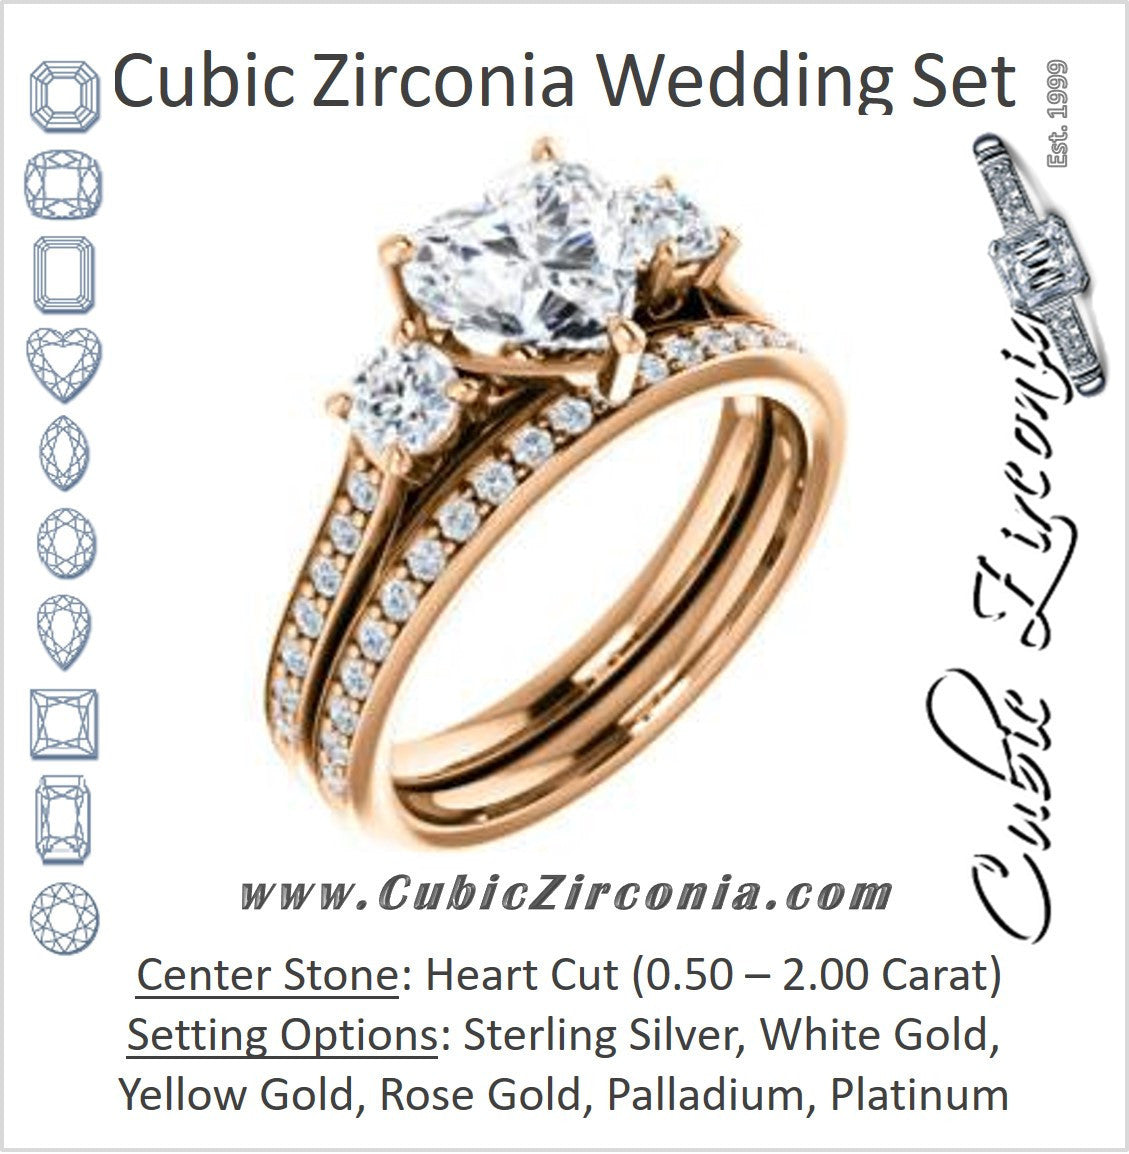 CZ Wedding Set, featuring The Tess engagement ring (Customizable Heart Cut Trellis-Enhanced Bridge Setting with Semi-Pavé Band)